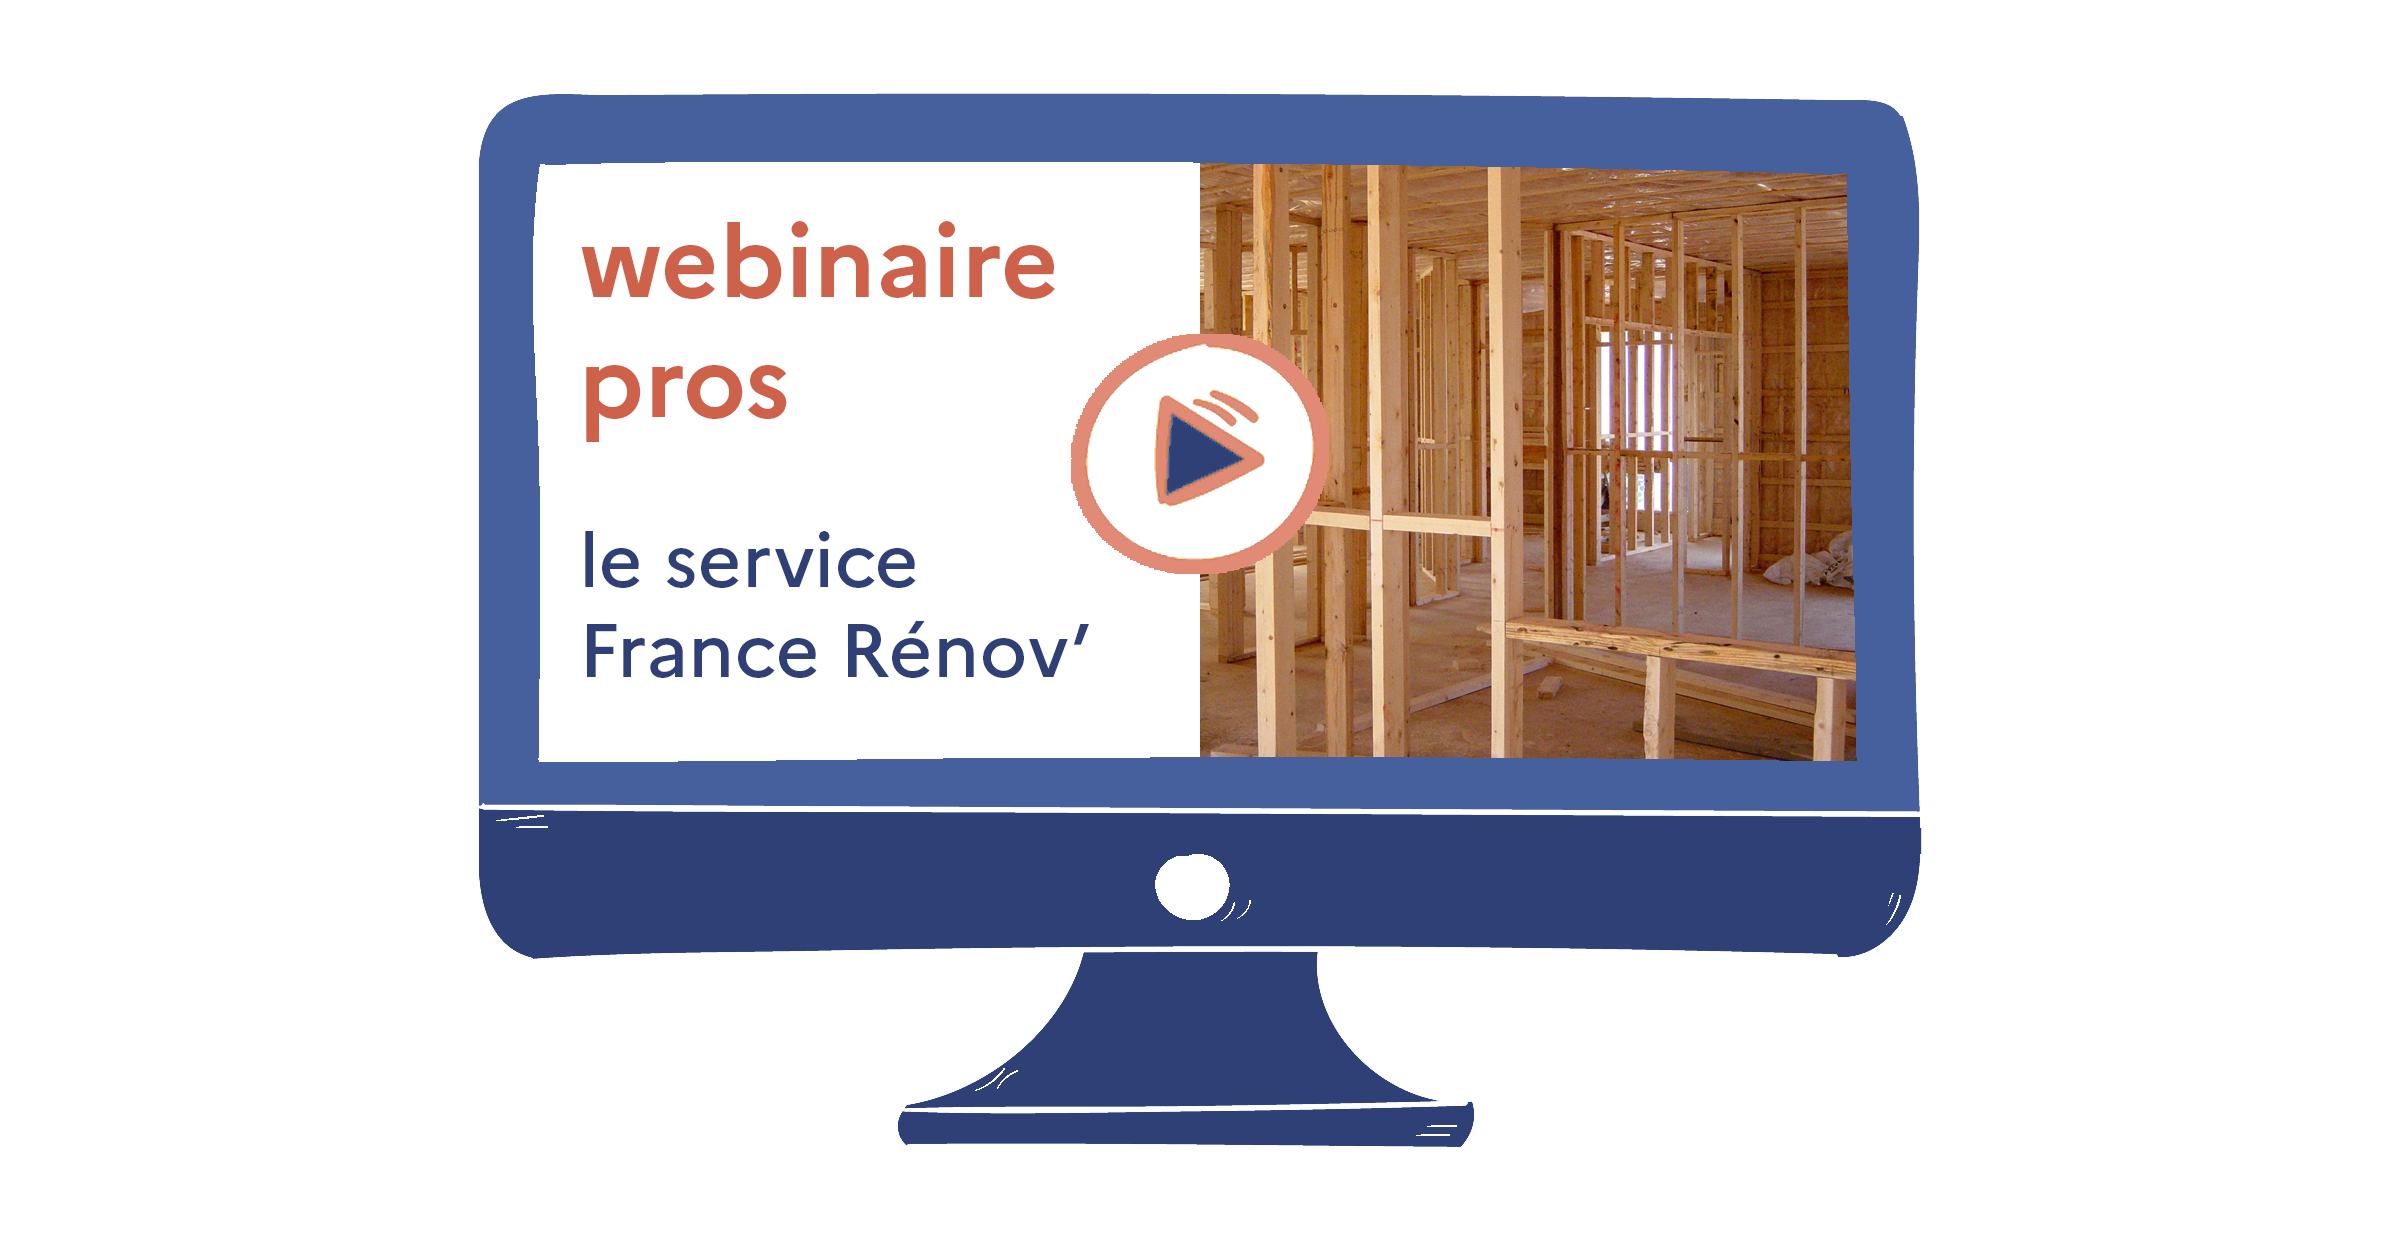 webinaire_pros_France_Renov_2400x1240_px